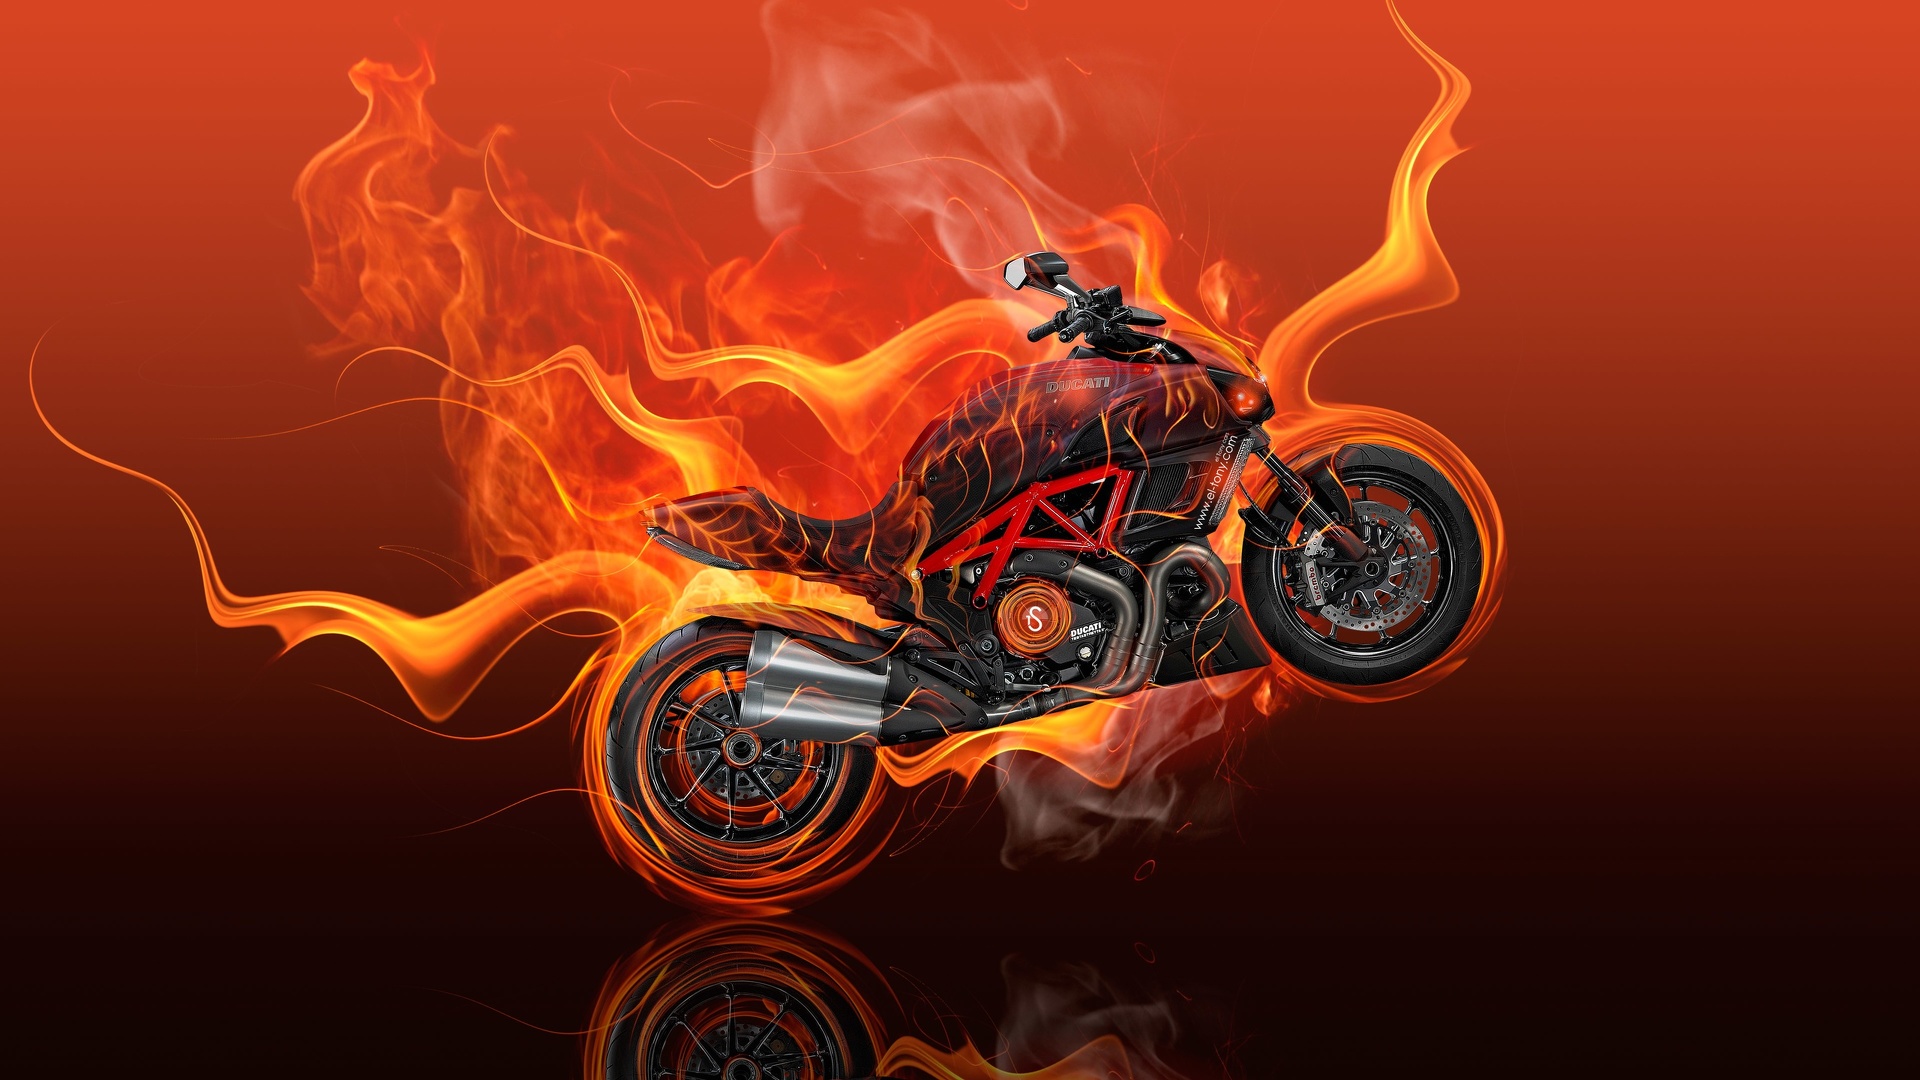 Ducati en feu - fond d'écran .jpg